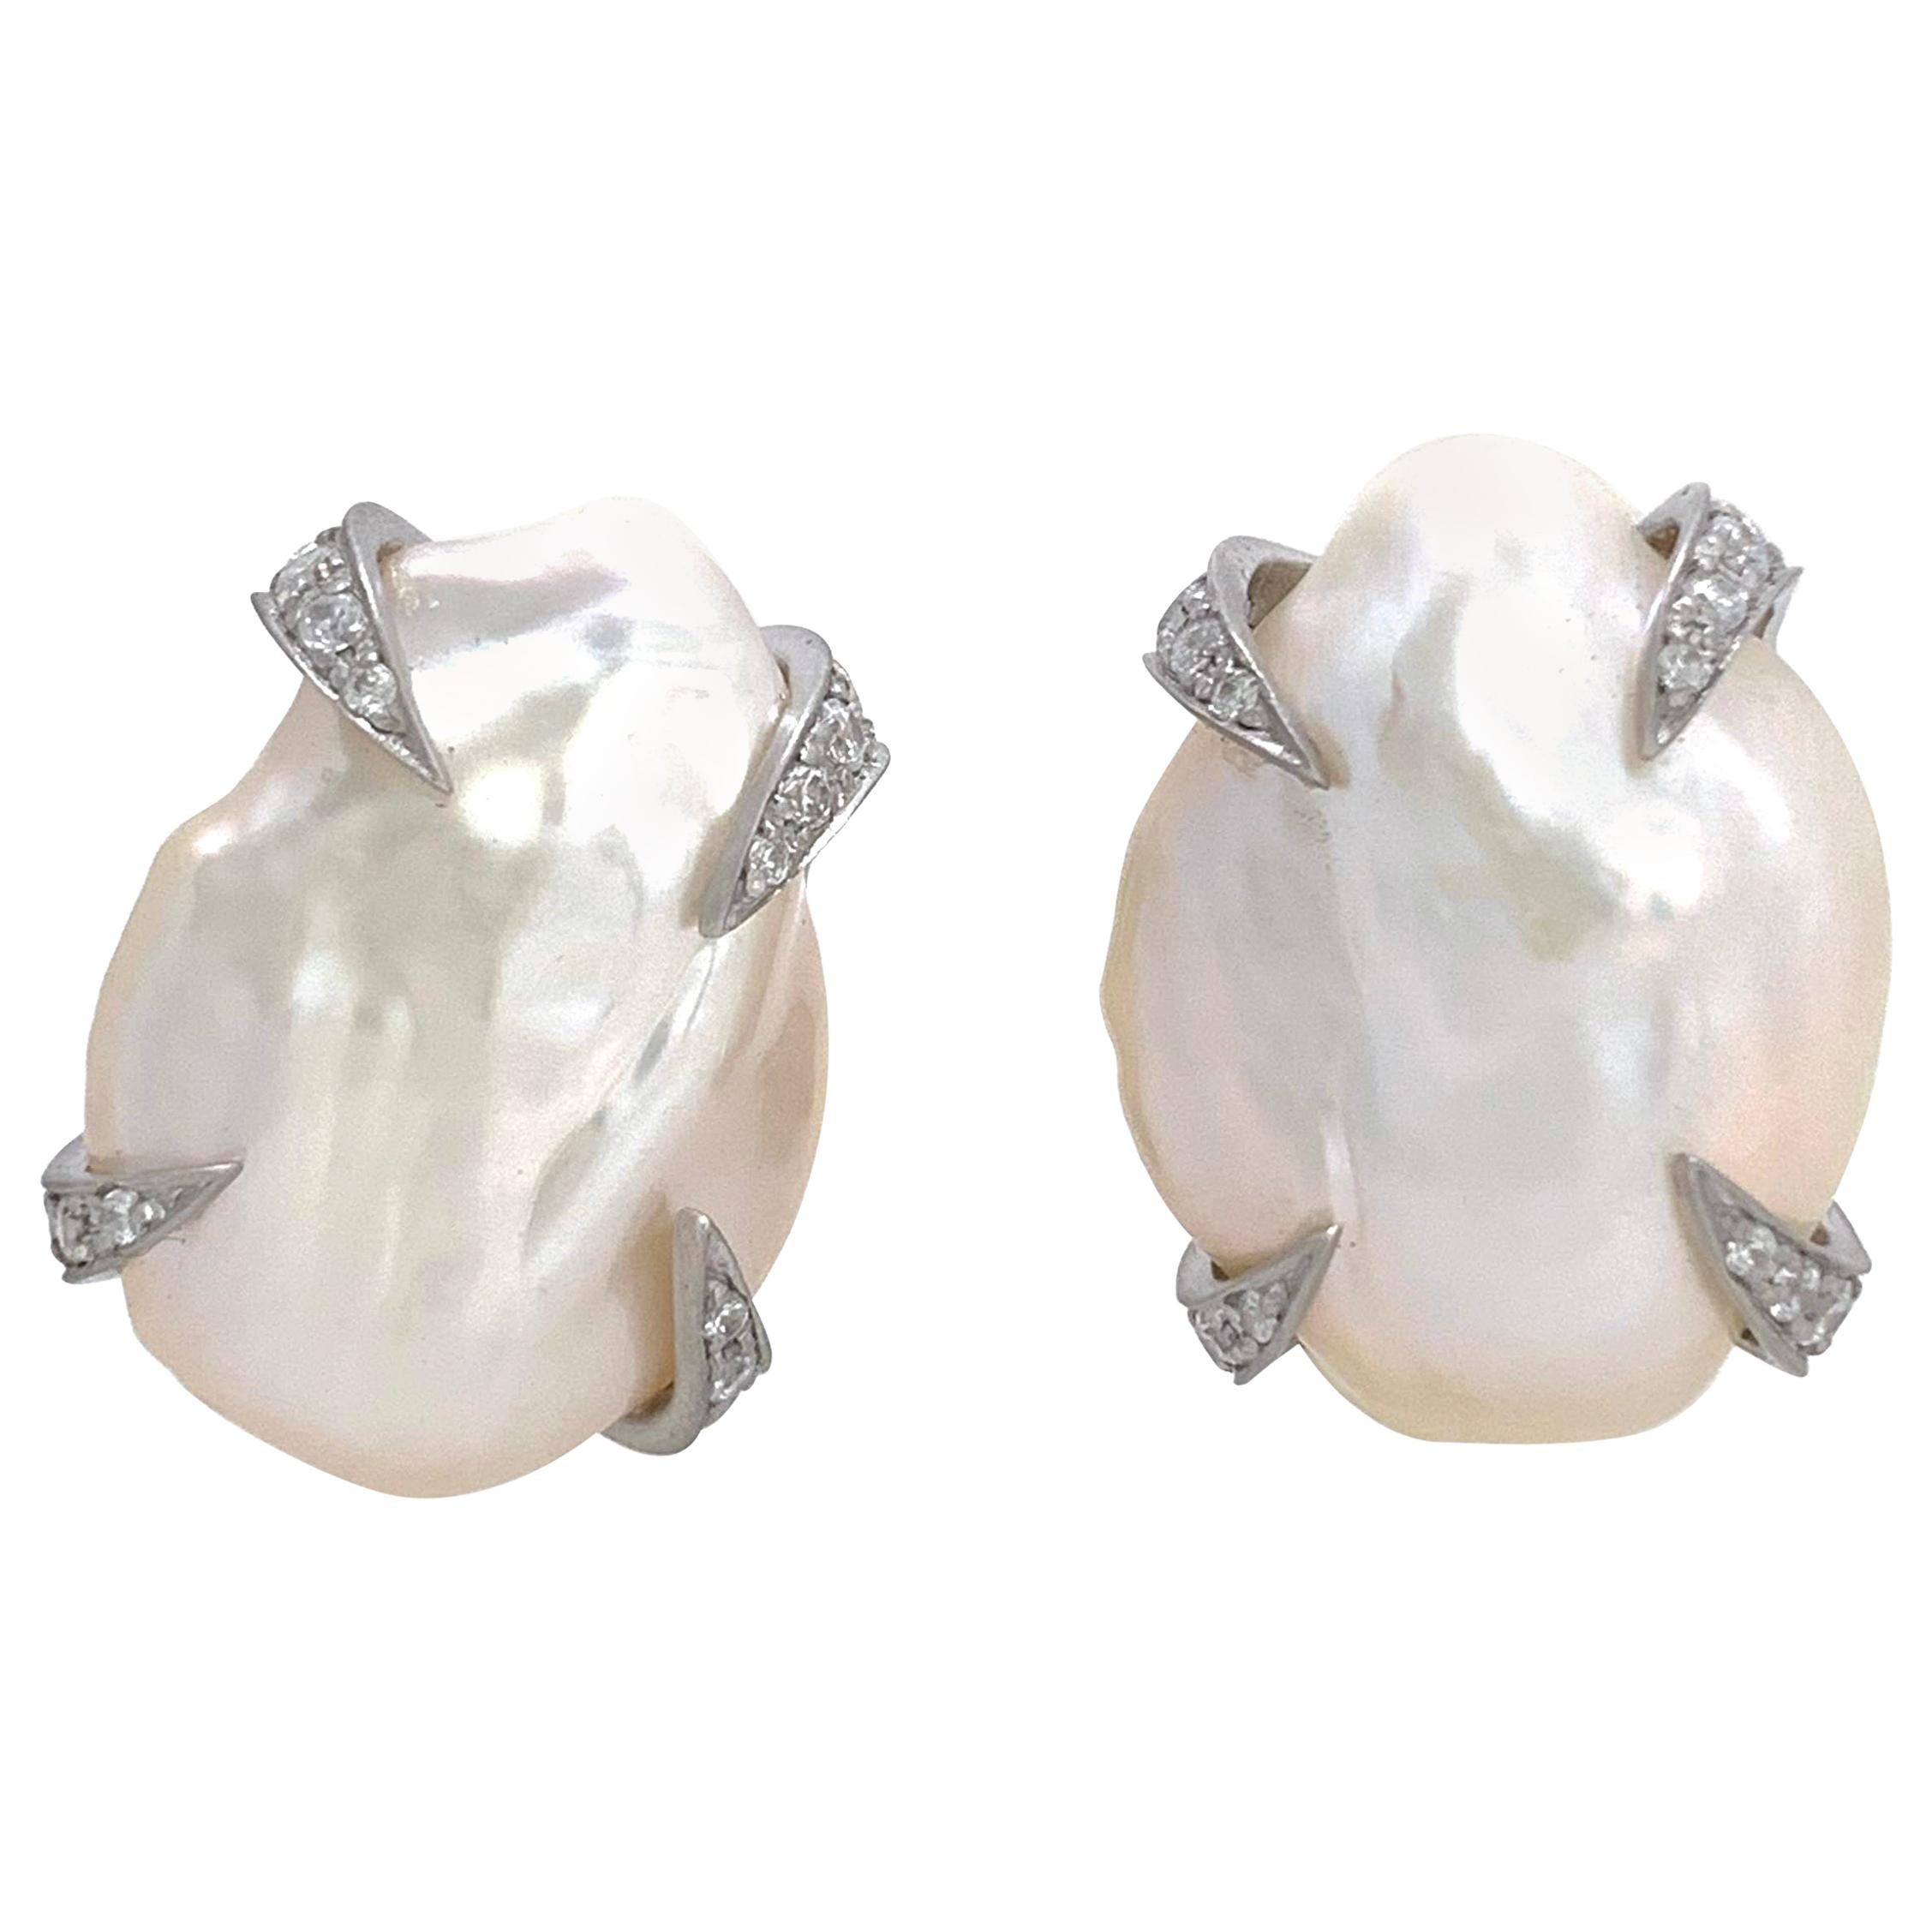 Large Lustrous Pair of 18mm White Keishi Pearl Earrings